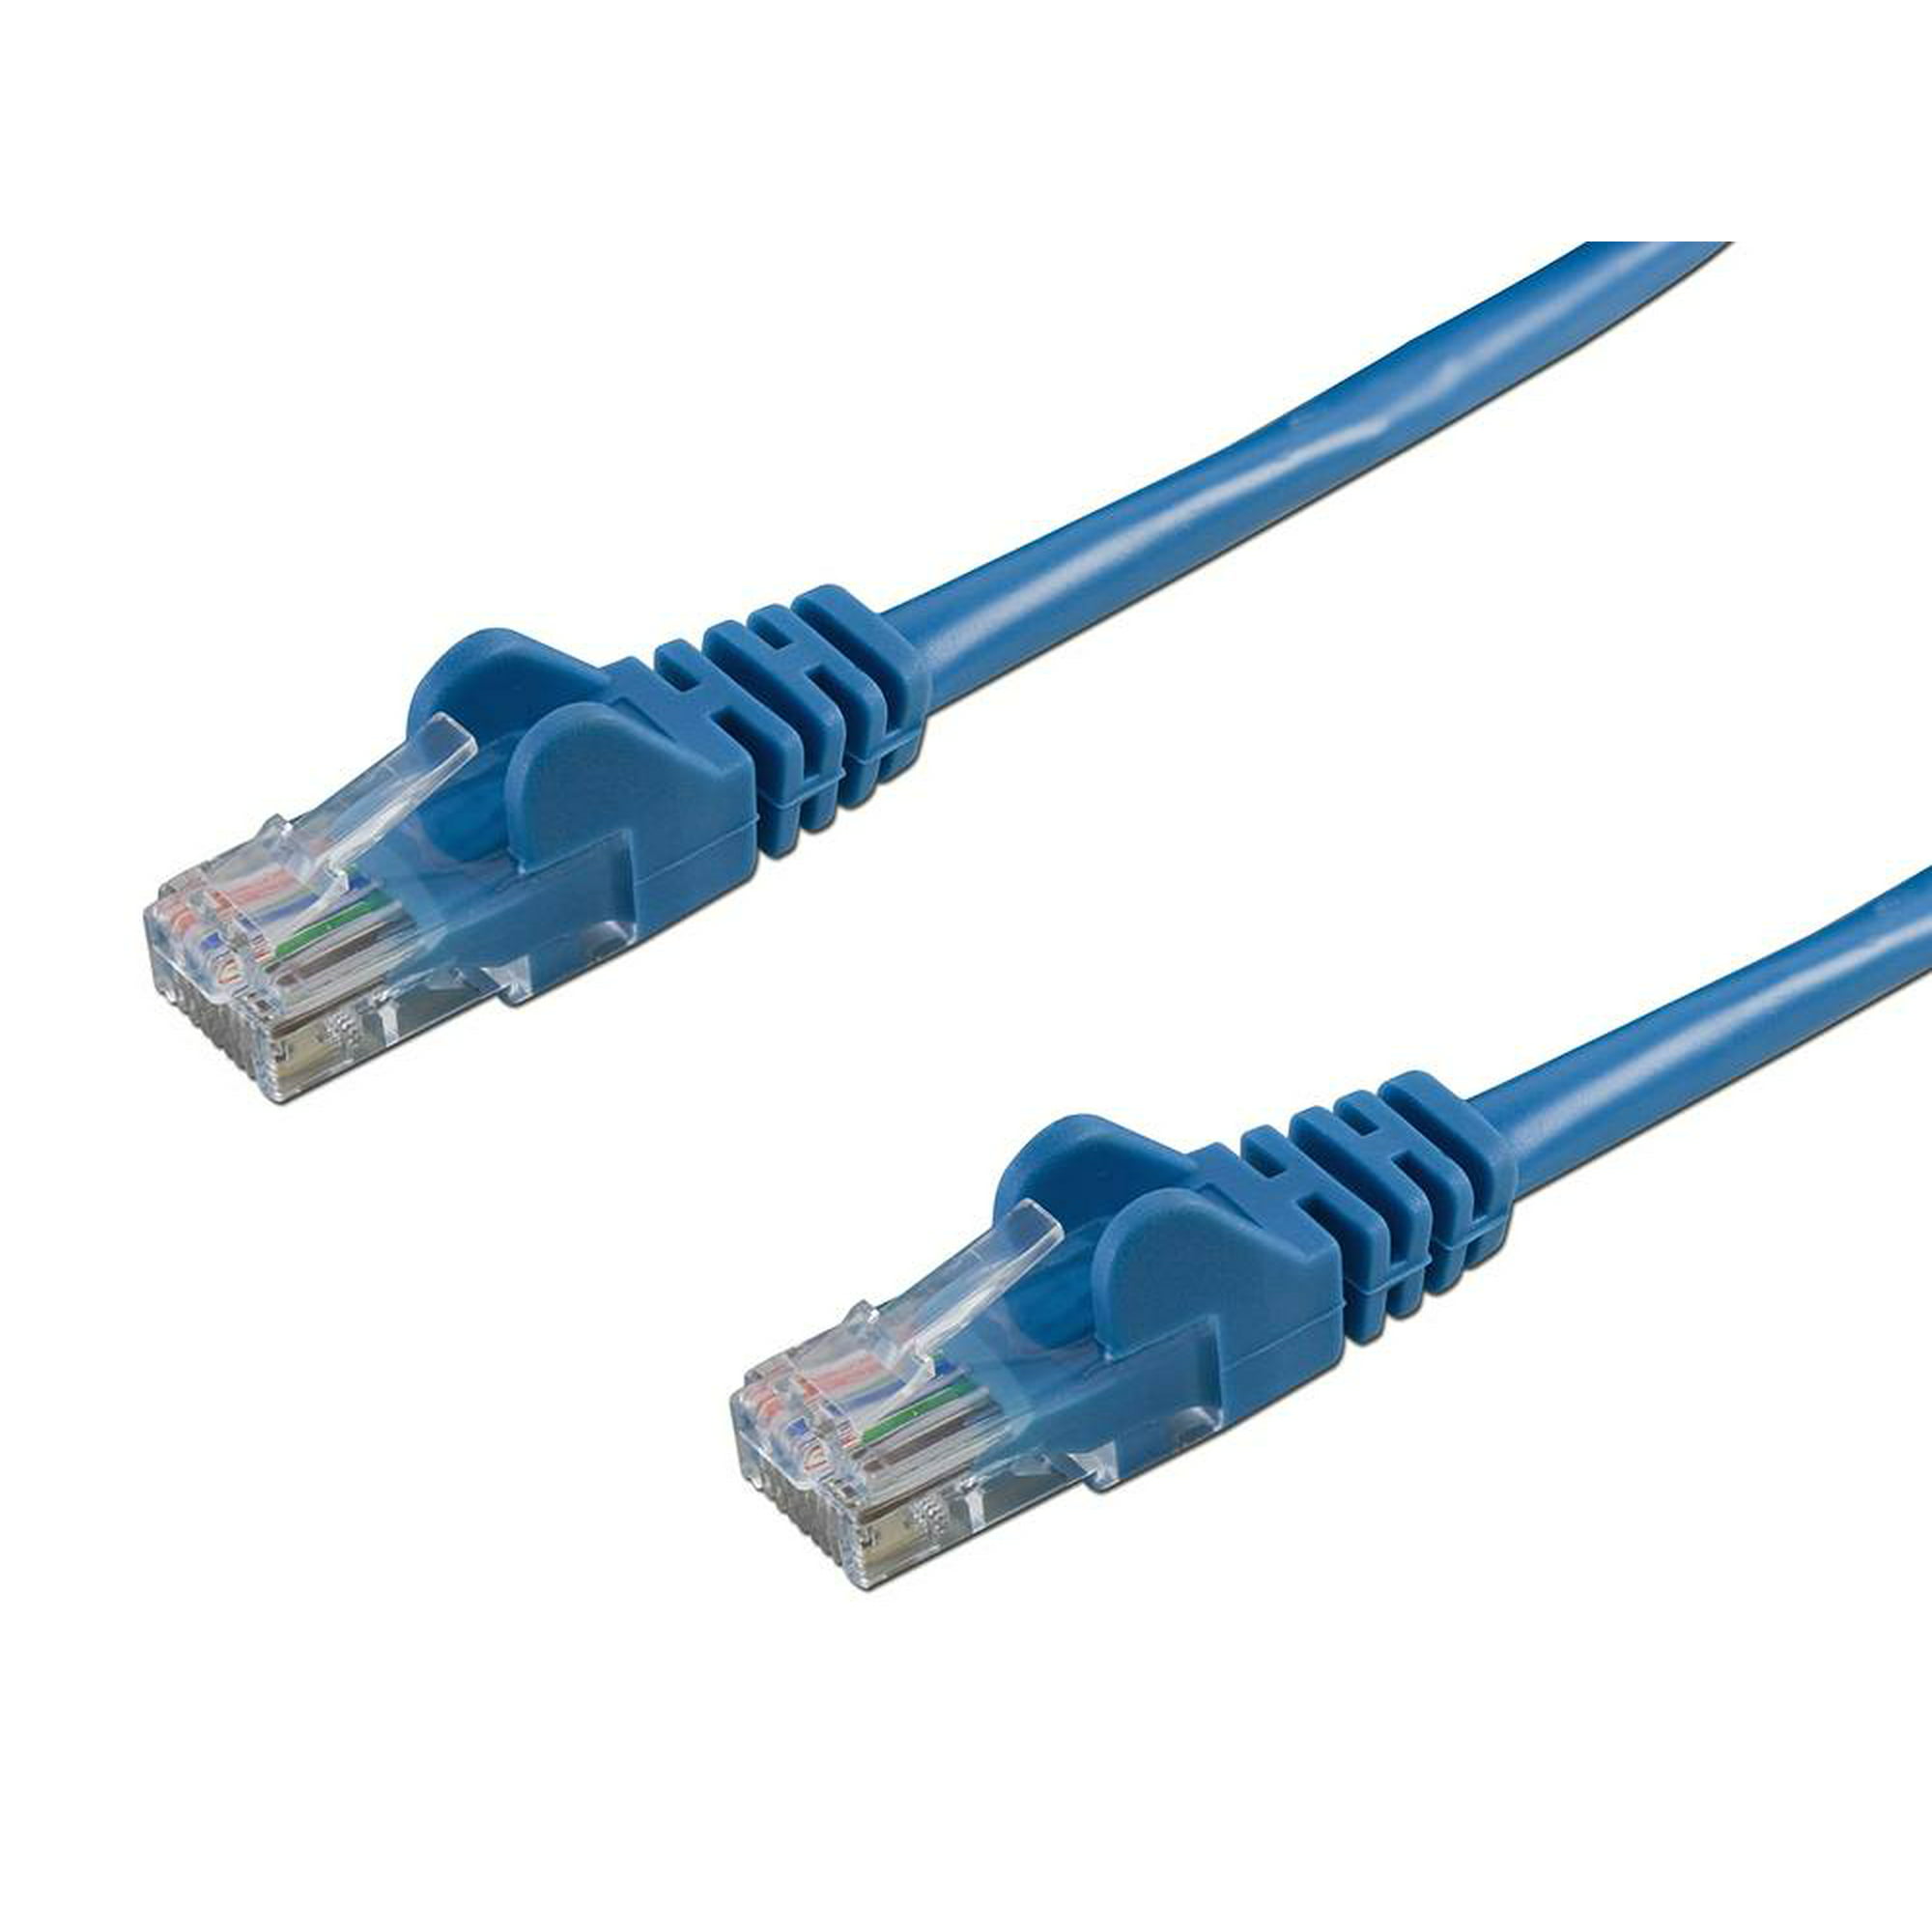 Cable UTP CAT6, azul Steren Tienda en Línea